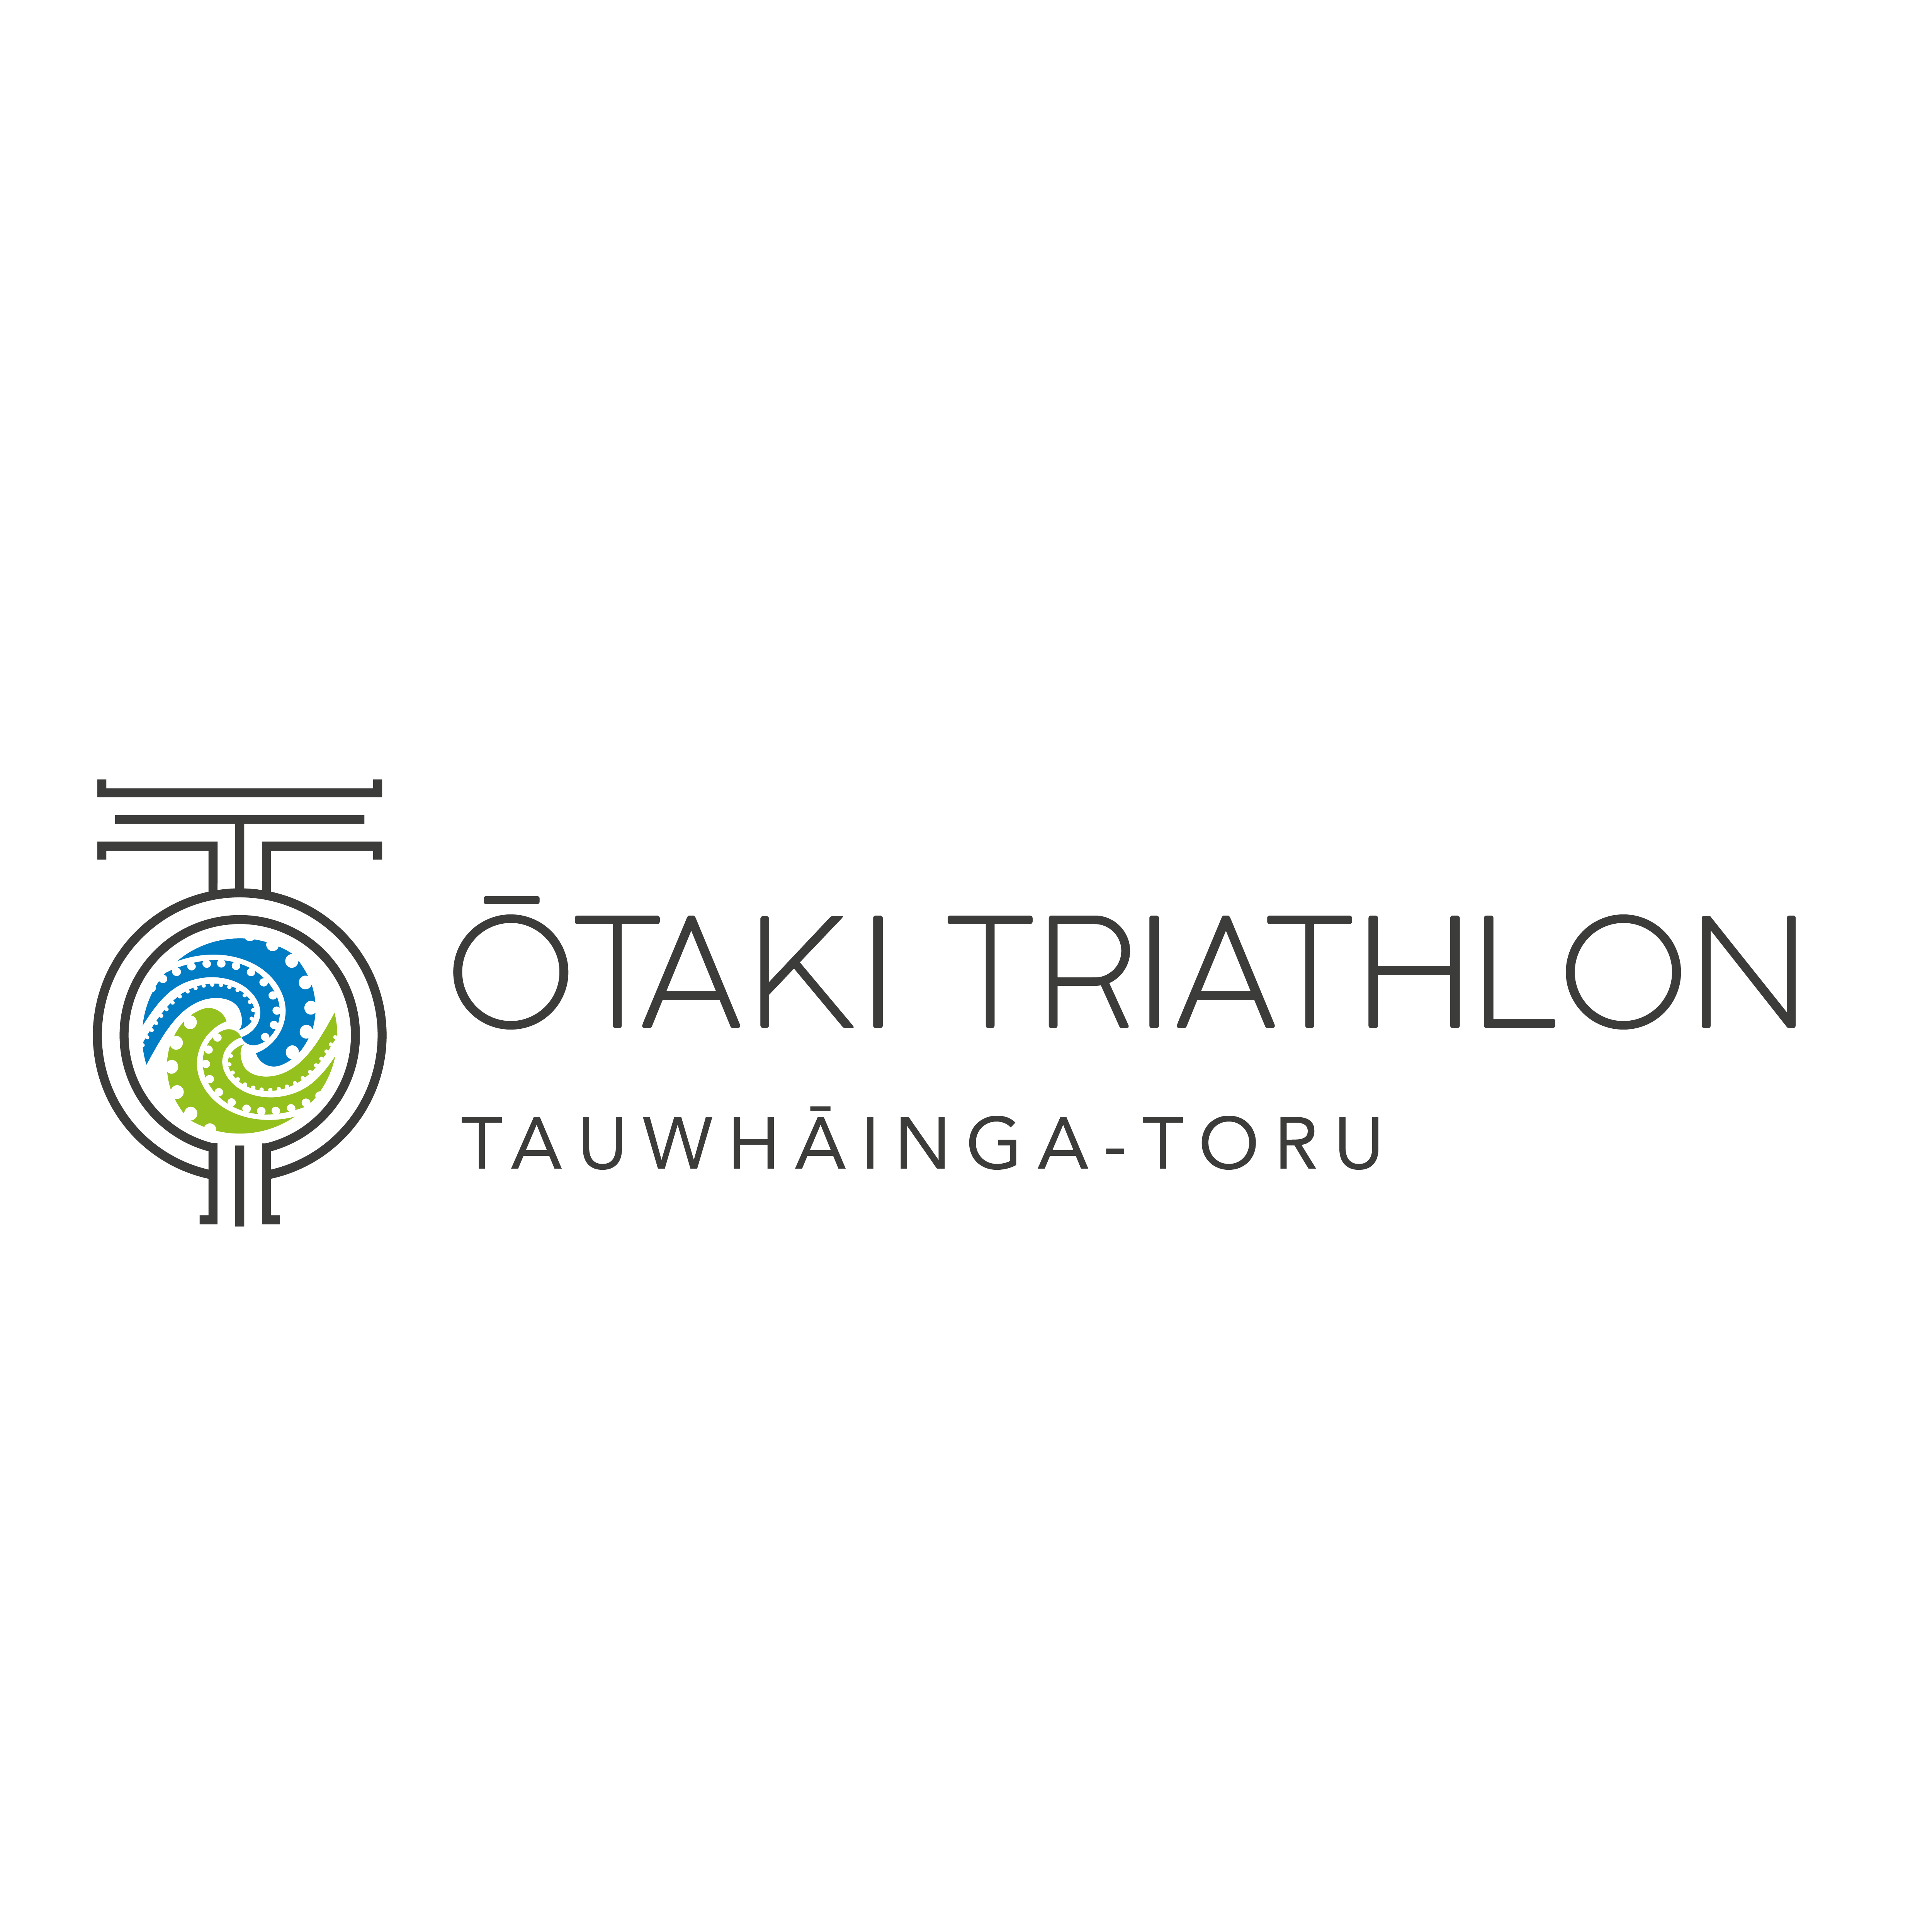 The Ōtaki Triathlong Tauwhāinga-Toru logo